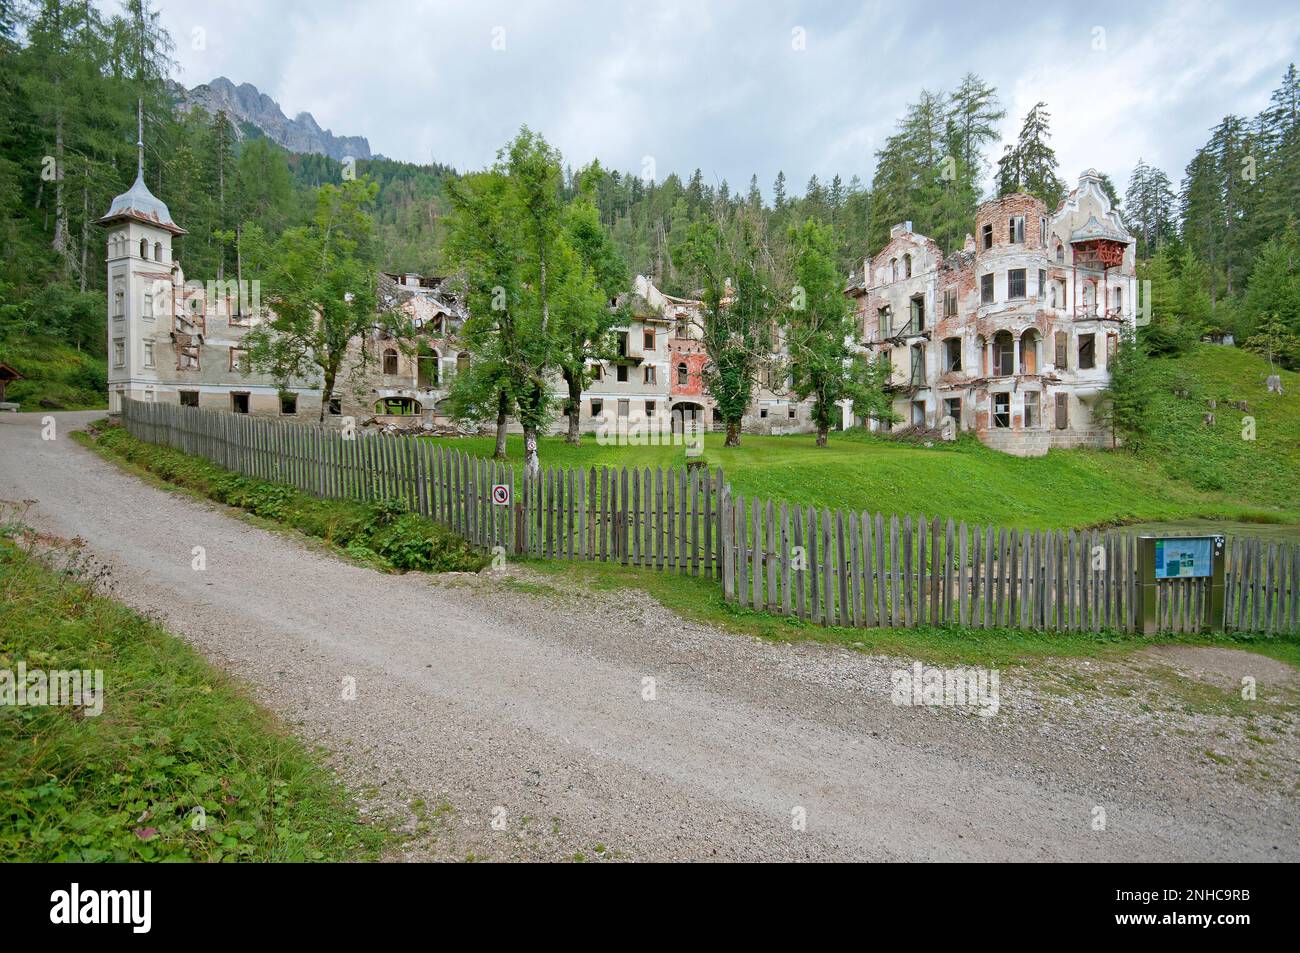 Ruins of Grand Hotel Wildbad, a former luxury spa hotel in Bagni di San Candido (thermal baths), San Candido (Innichen), Trentino-Alto Adige, Italy Stock Photo